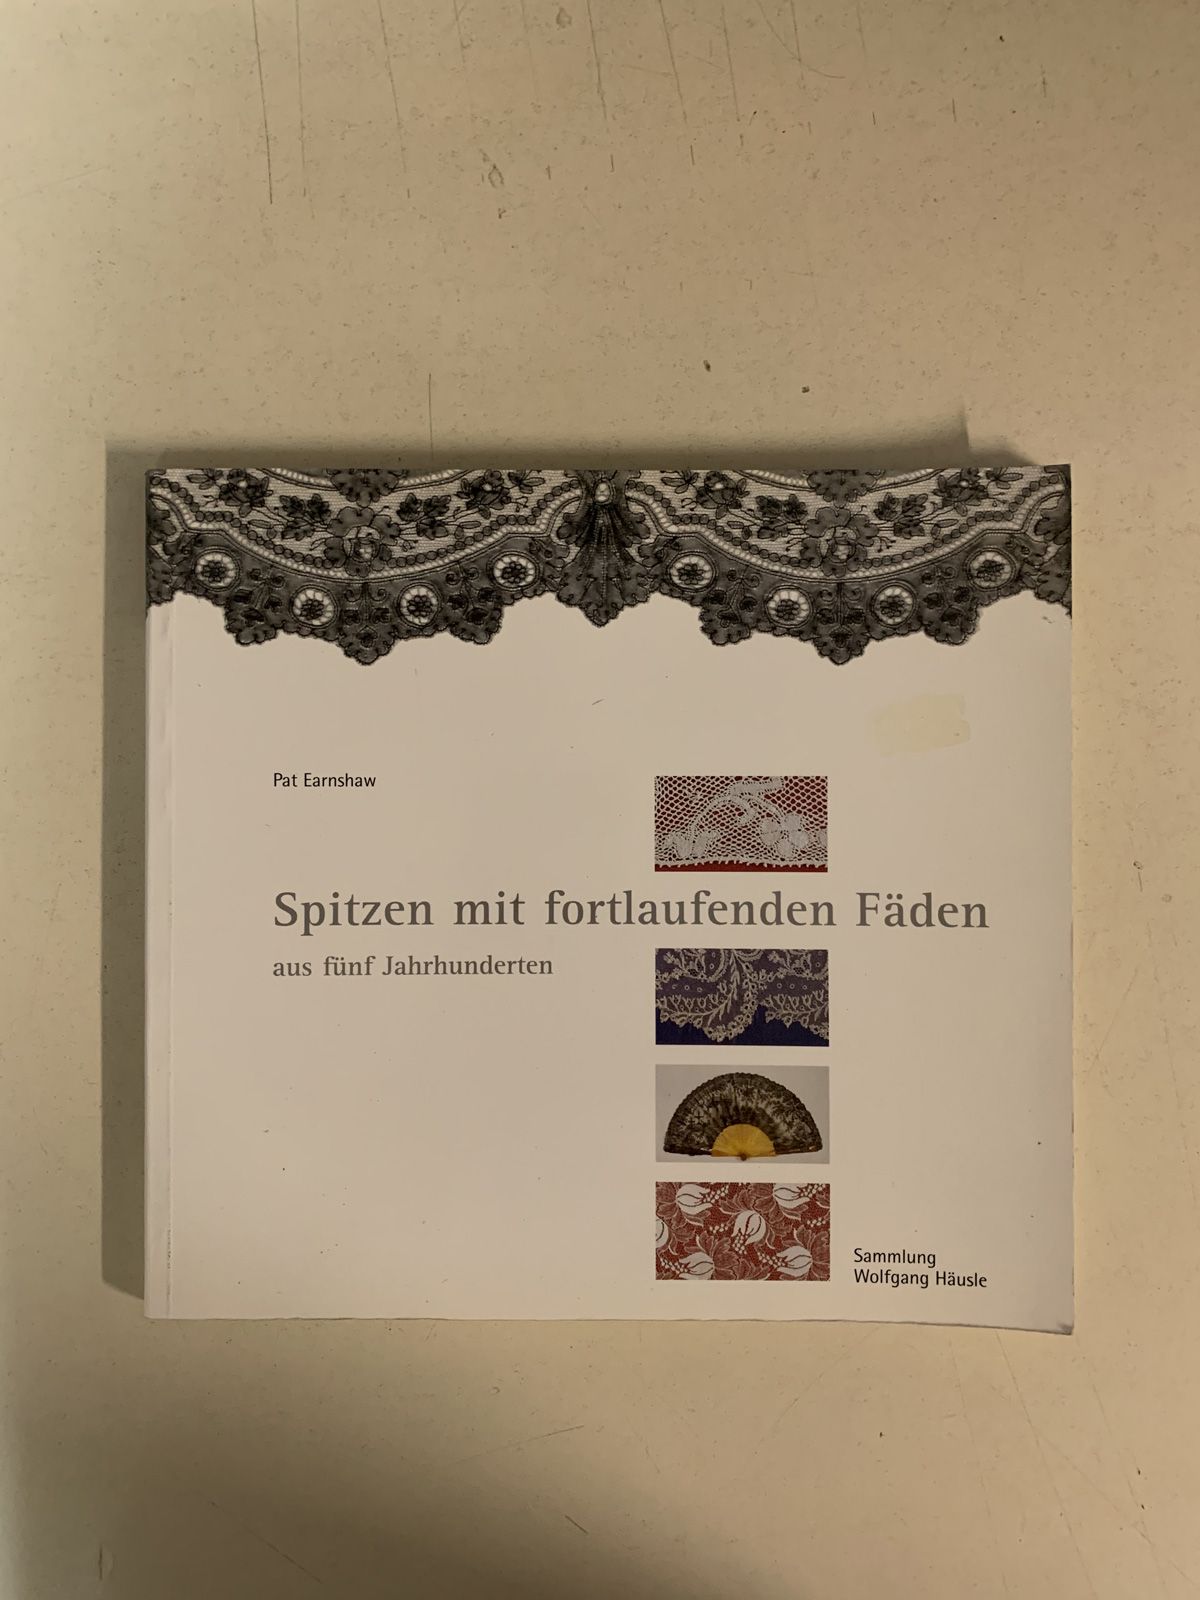 Null 13本关于花边技术的德文书籍。
三本关于花边的书籍，包括一本关于尚蒂伊花边的书籍，在此基础上，我们附上七本INFORMATIONSBLATT小册子，由&hellip;